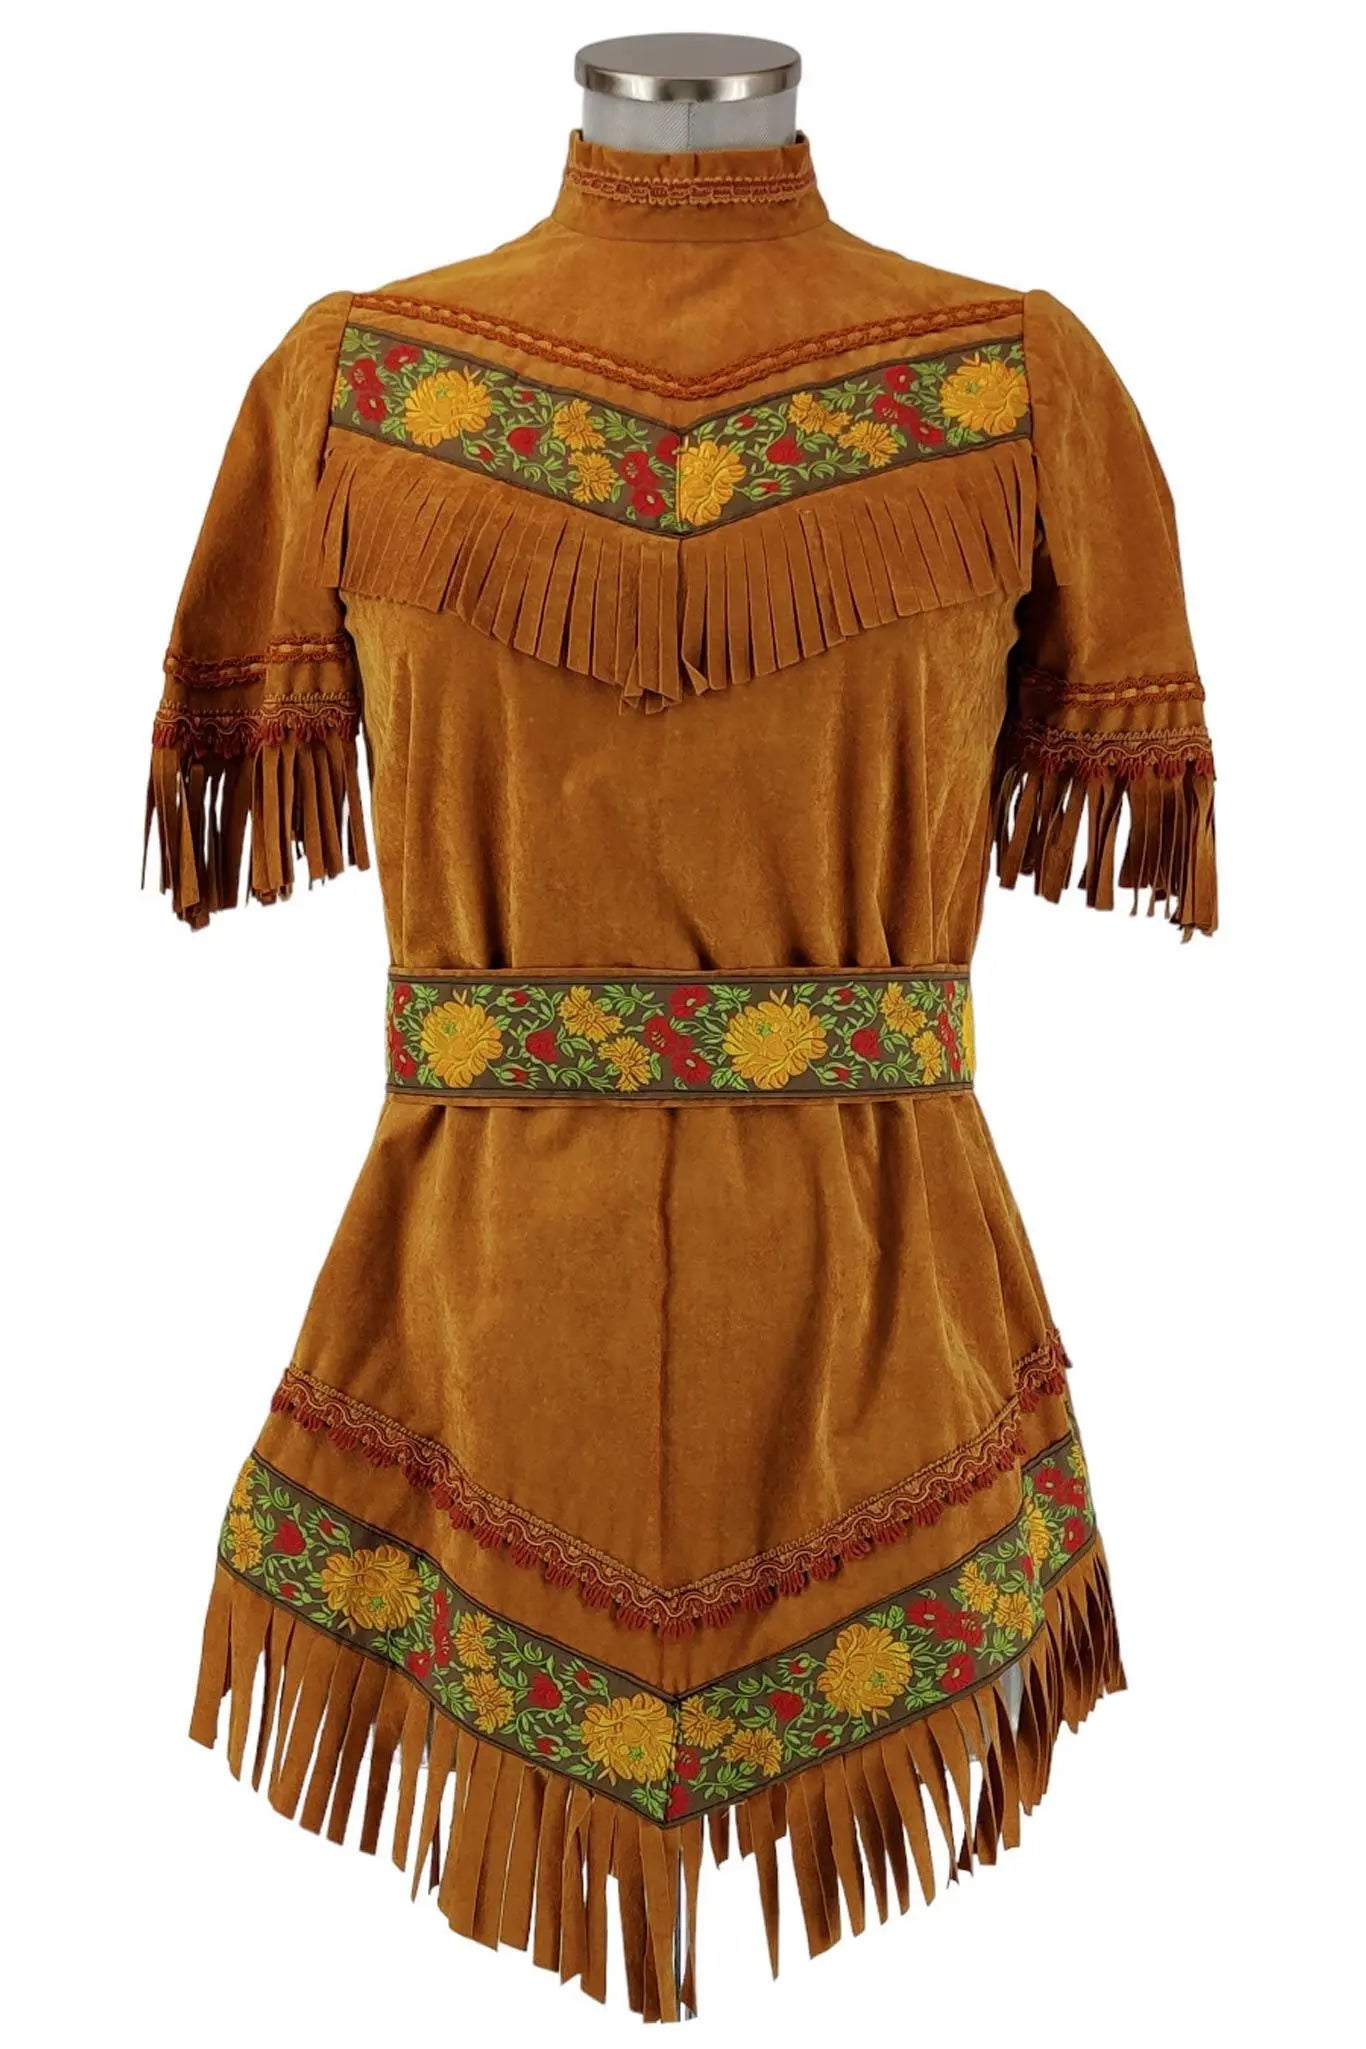 Noleggio costume donna indiana nativa americana-carnevale – COSTUMIA